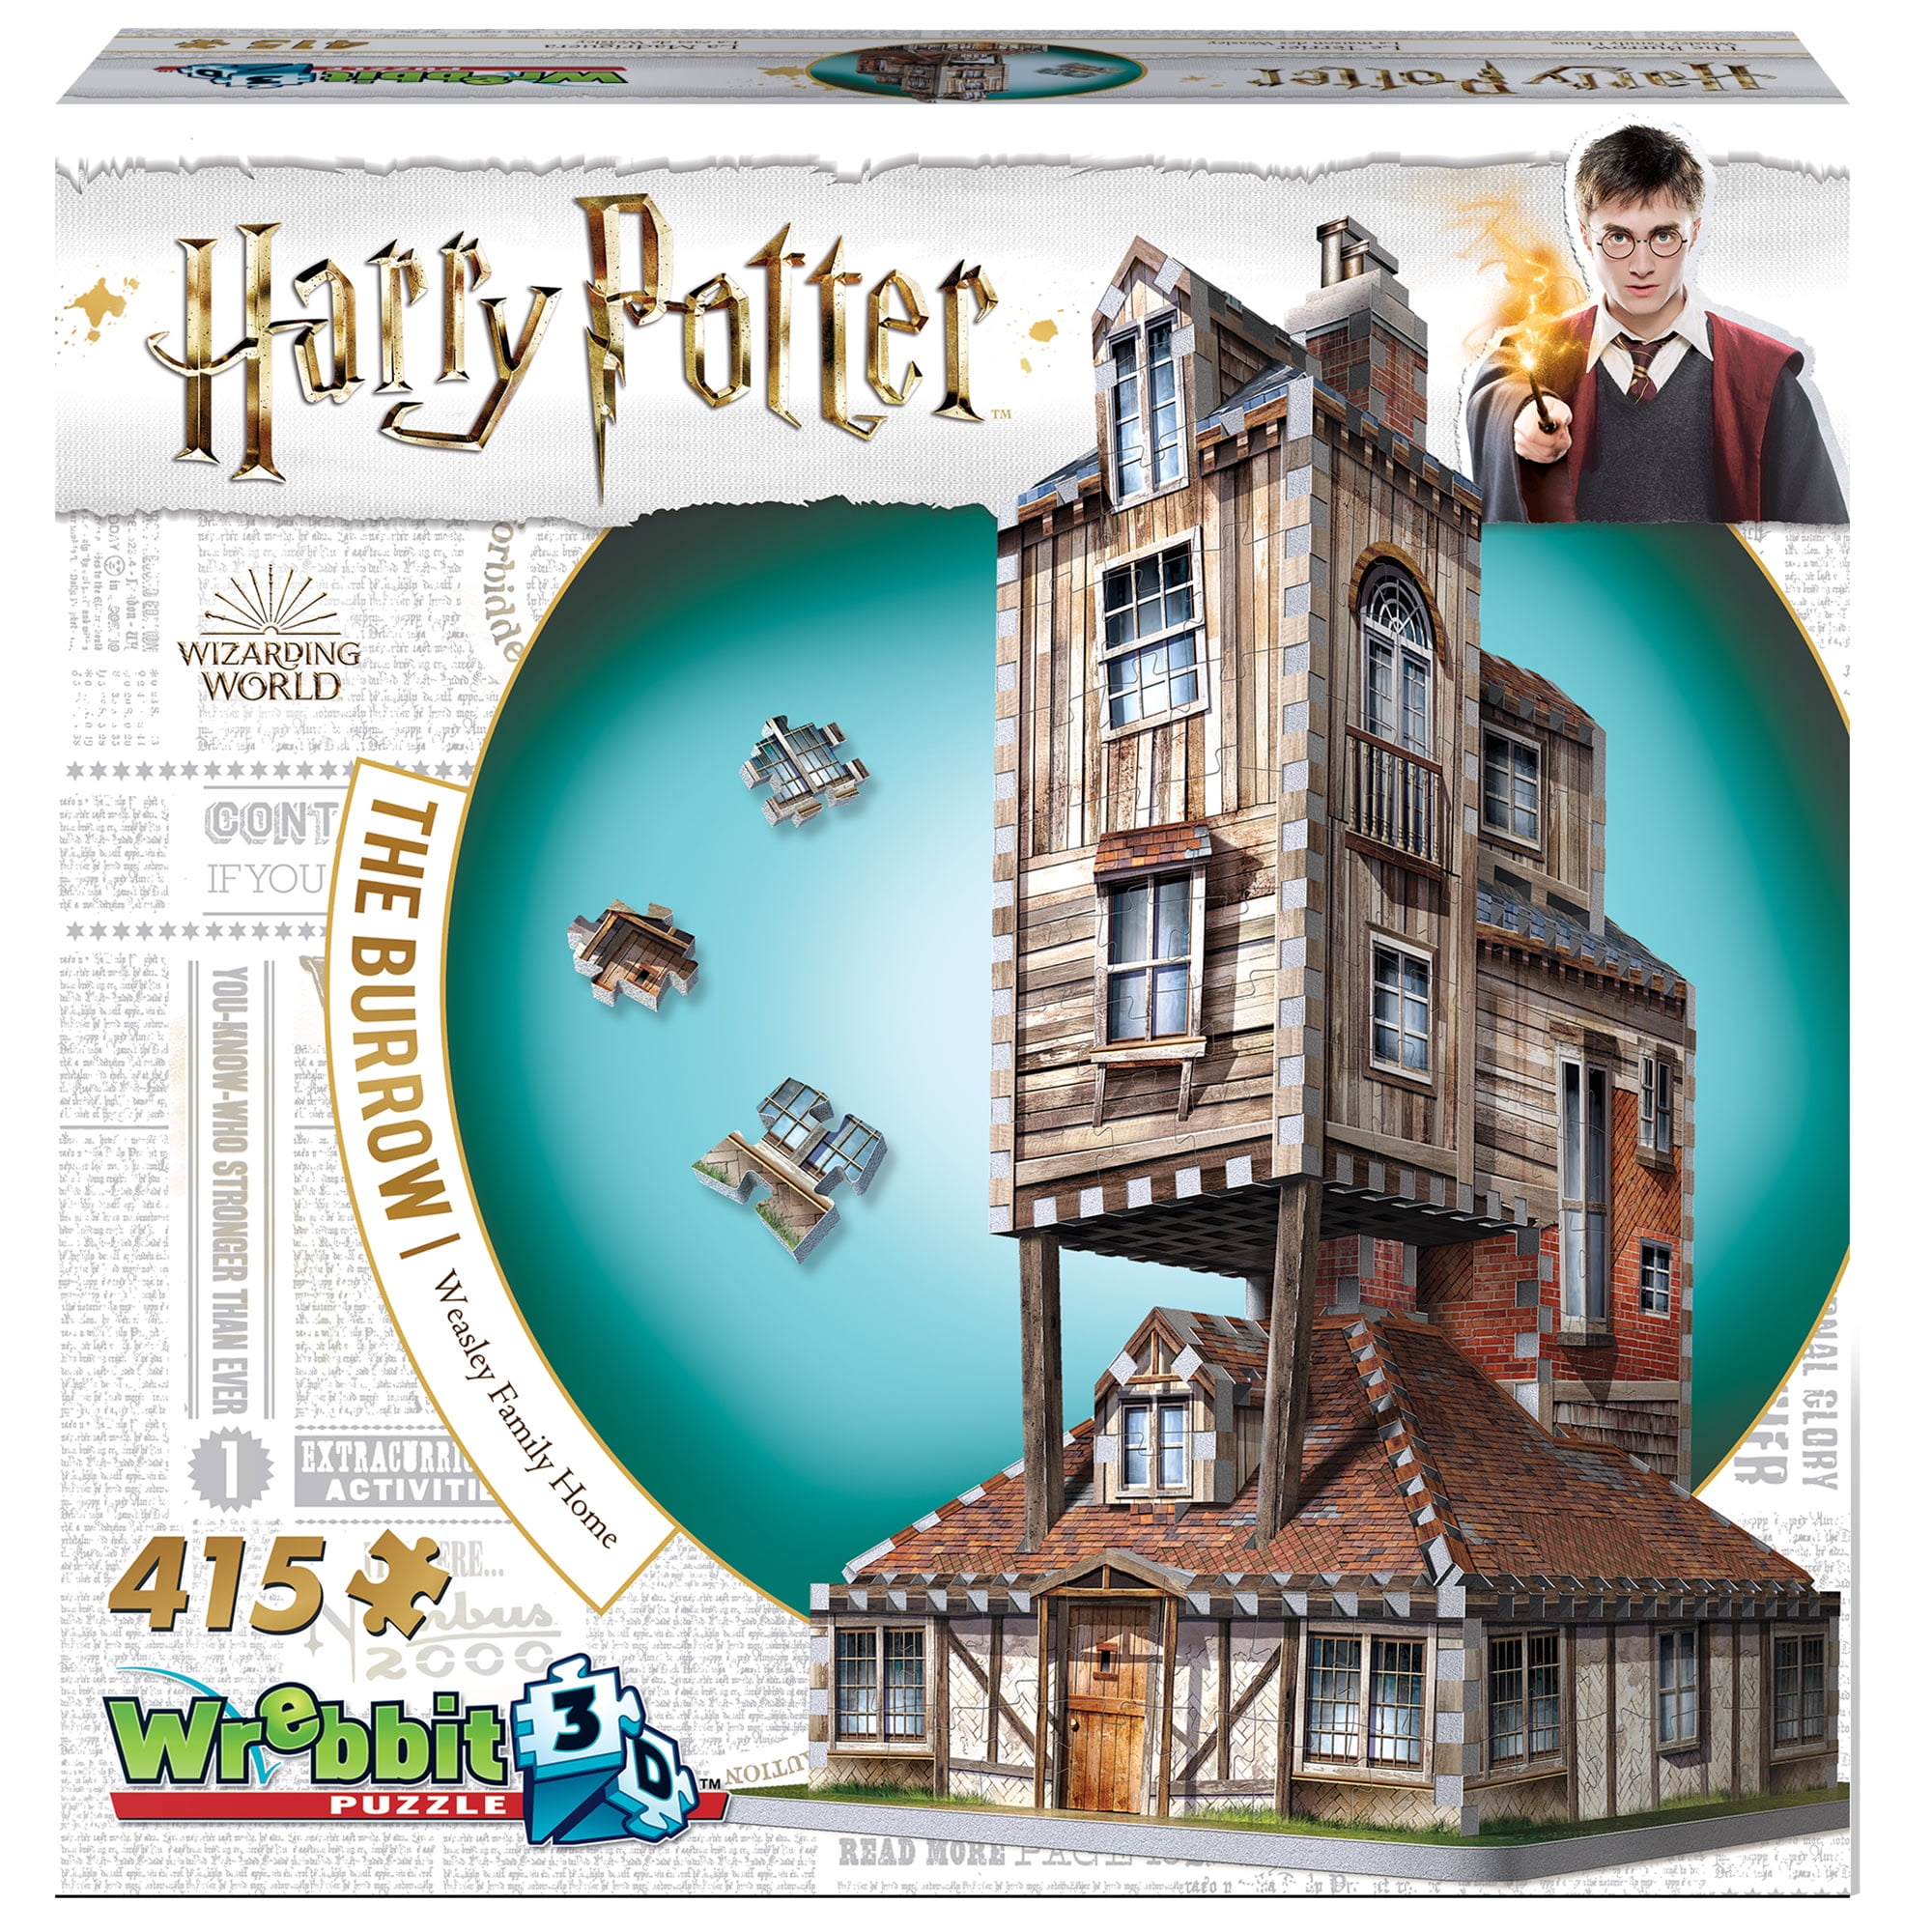 The Burrow Weasley Family Puzzle 3D Harry Potter 415 Pieces WREBBIT W3D-1011 